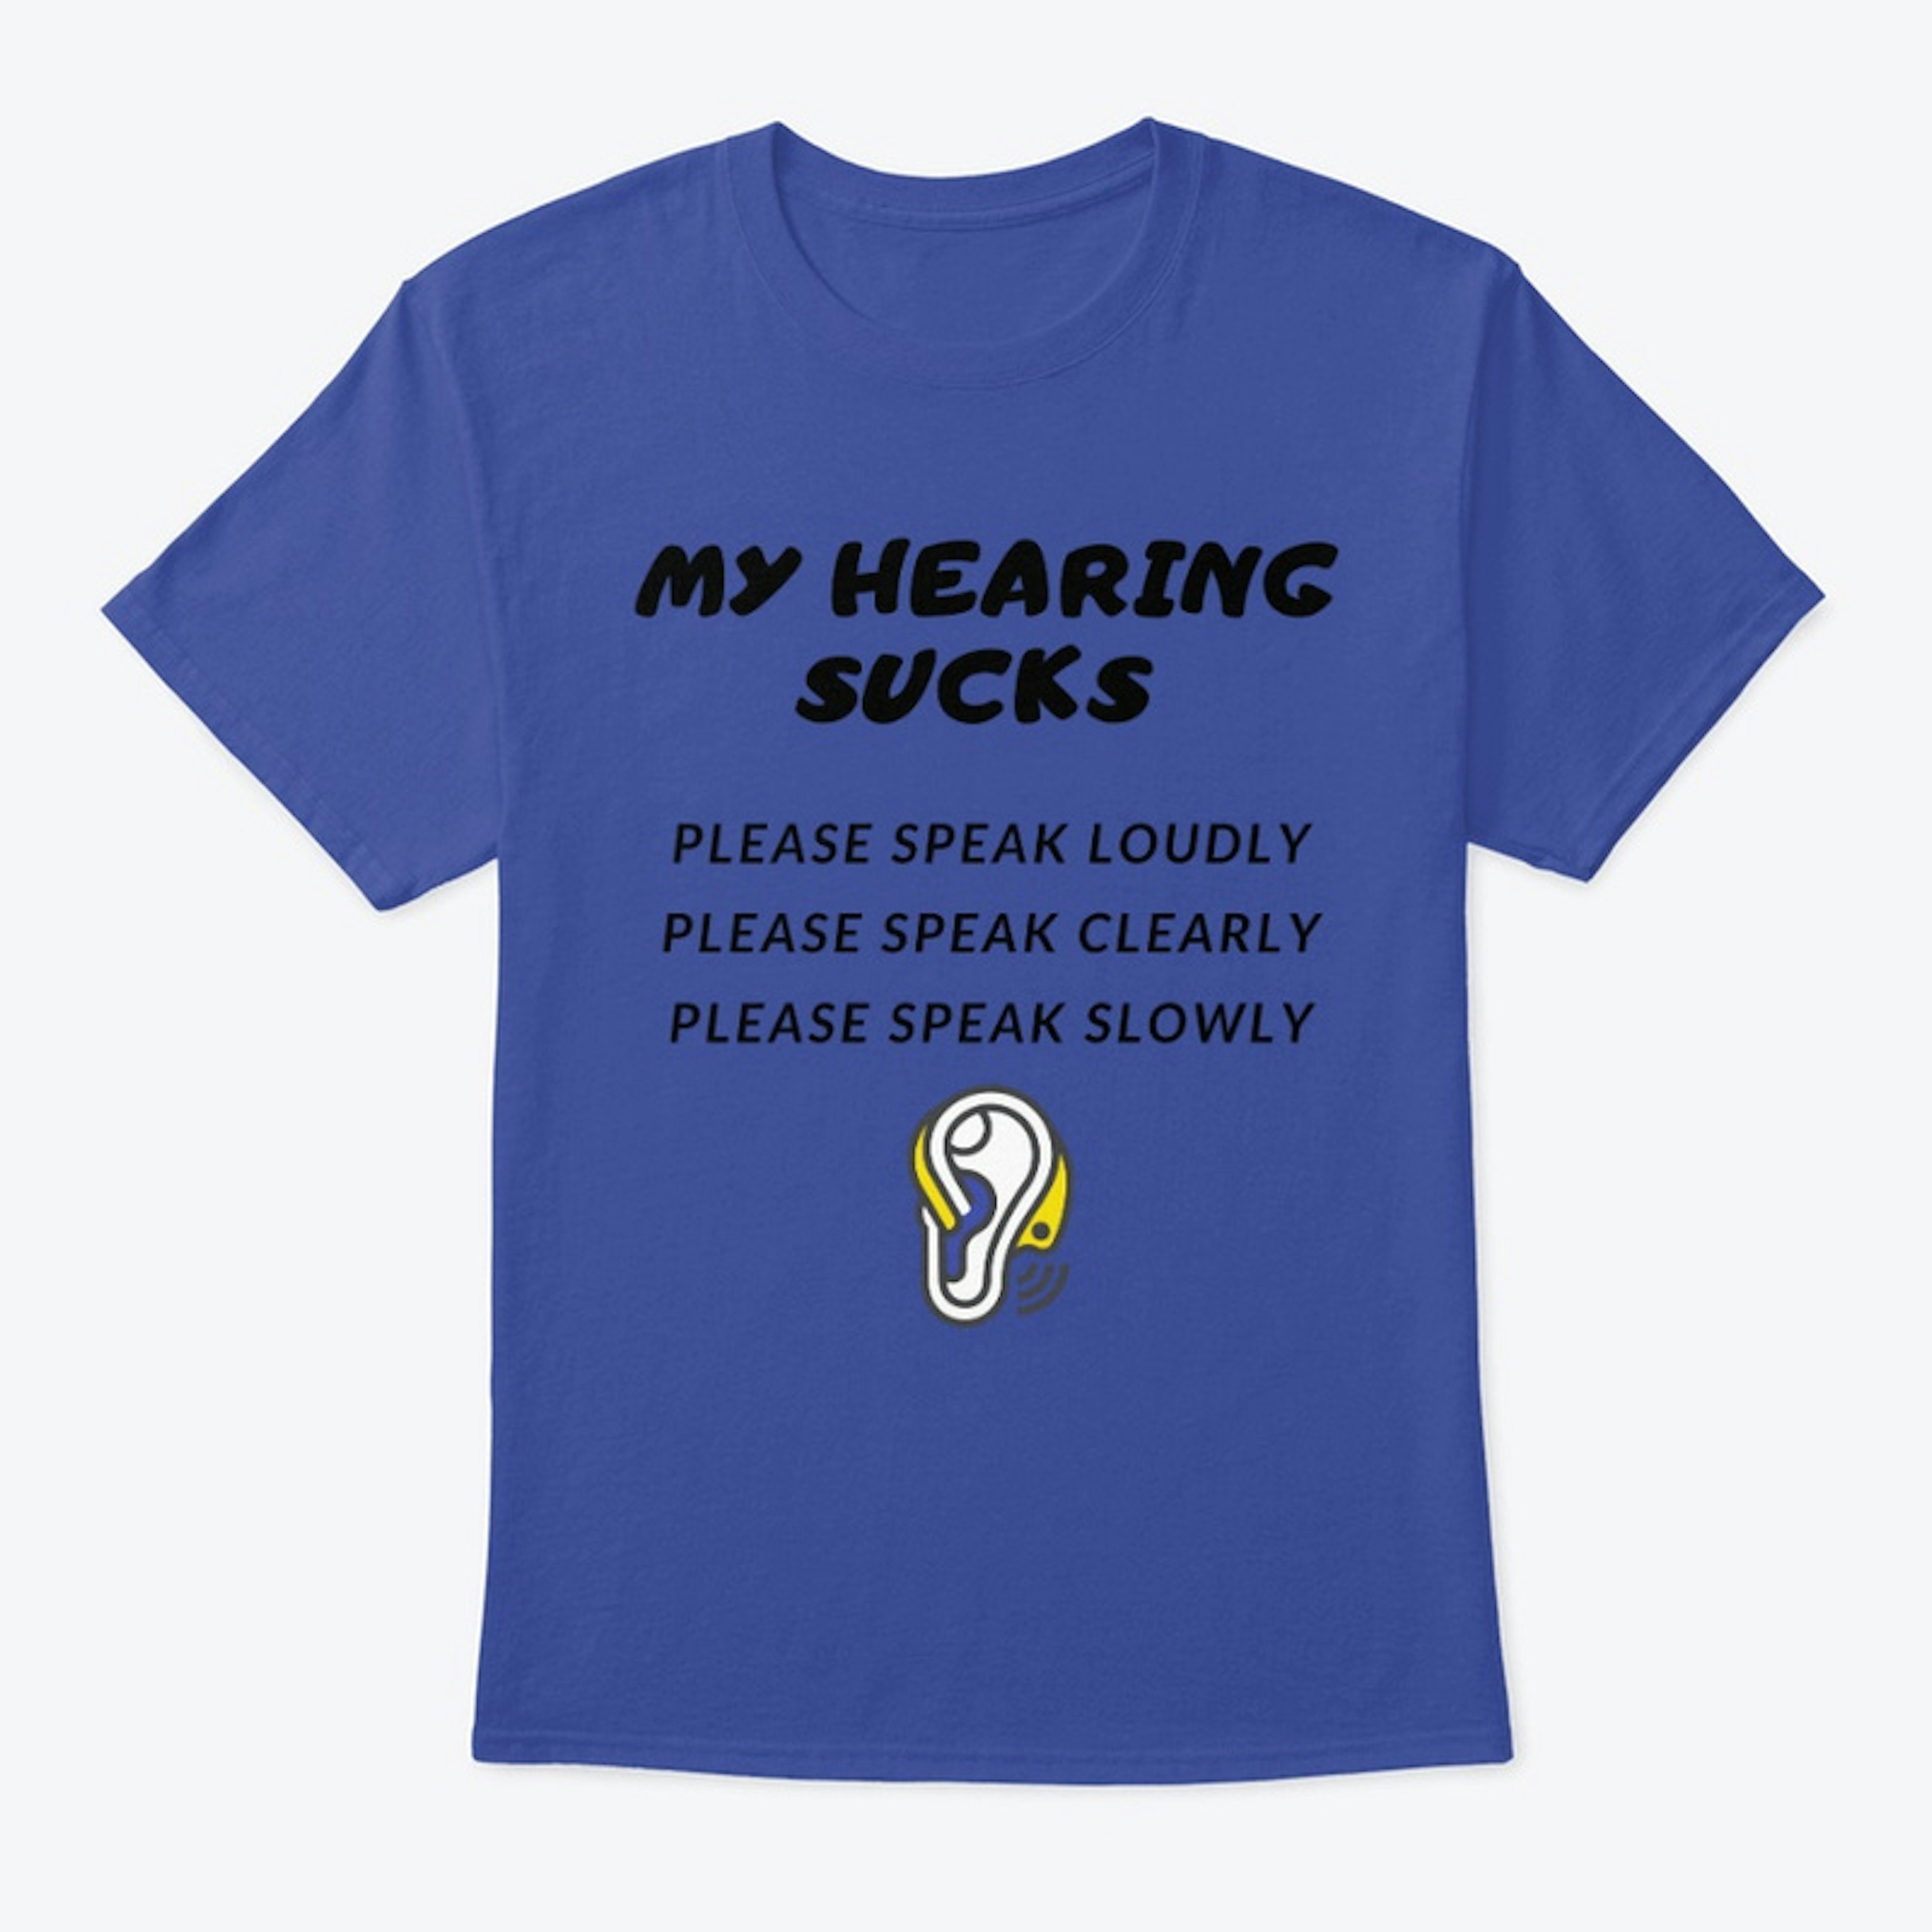 My Hearing Sucks v.2